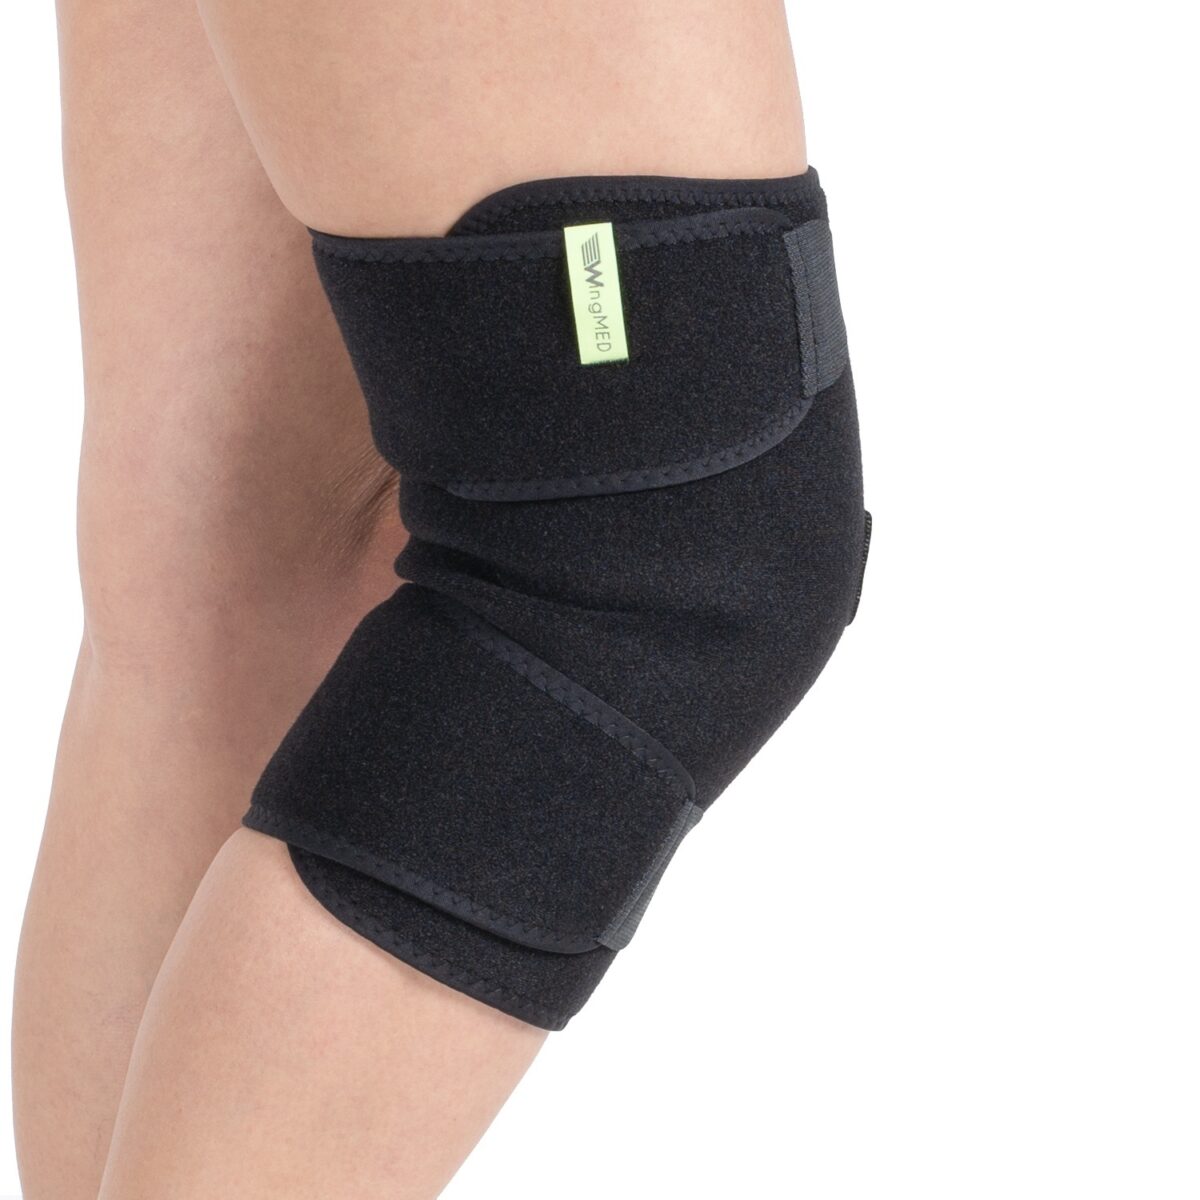 wingmed orthopedic equipments W502 simple knee support 98